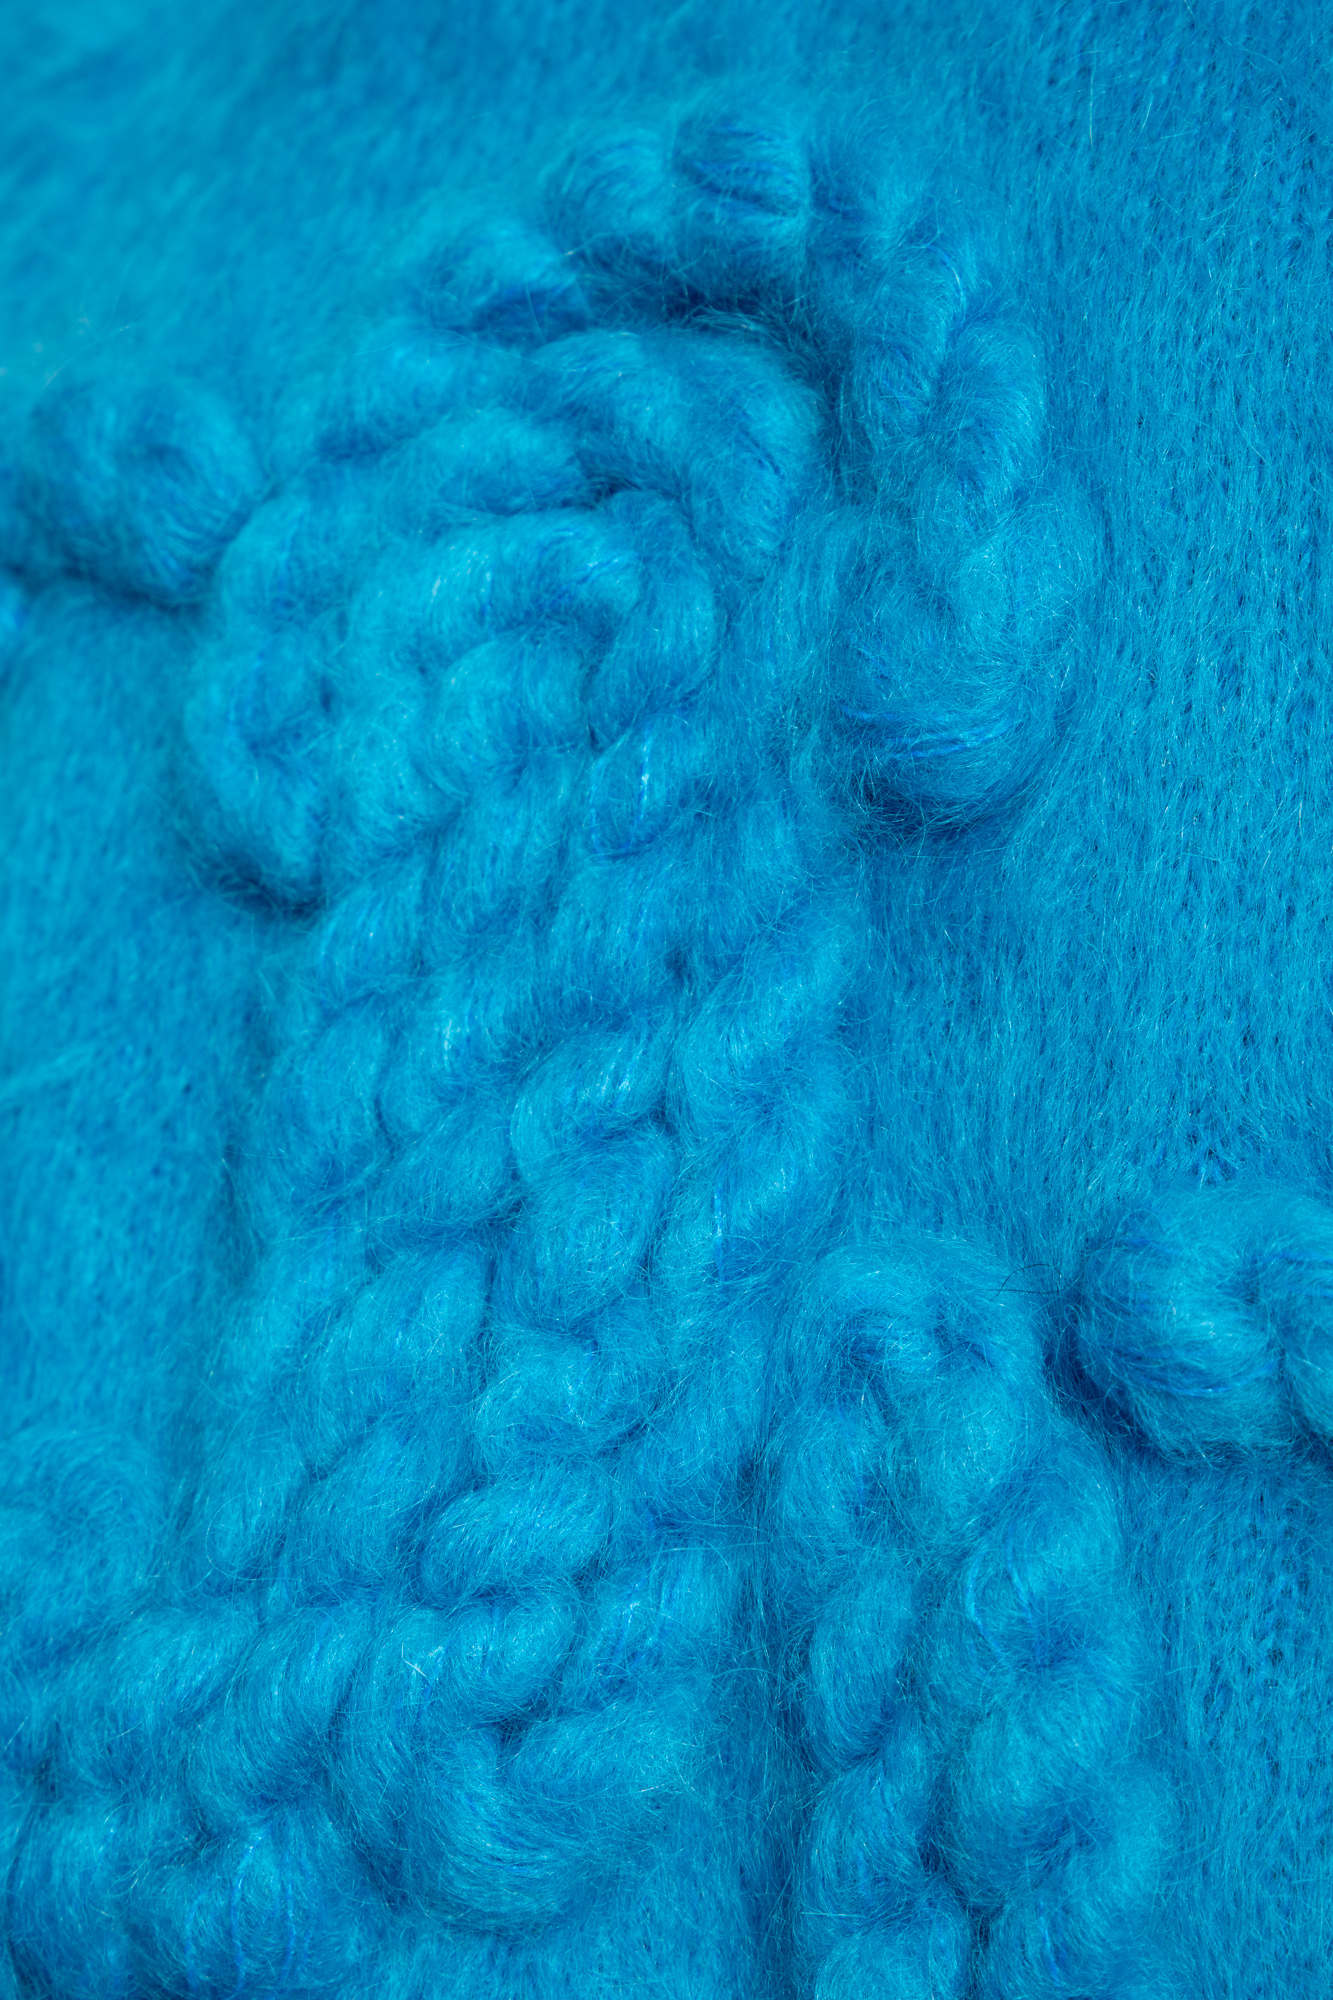 Baby Chunky Knit Sweater - Stone - Maison Blue